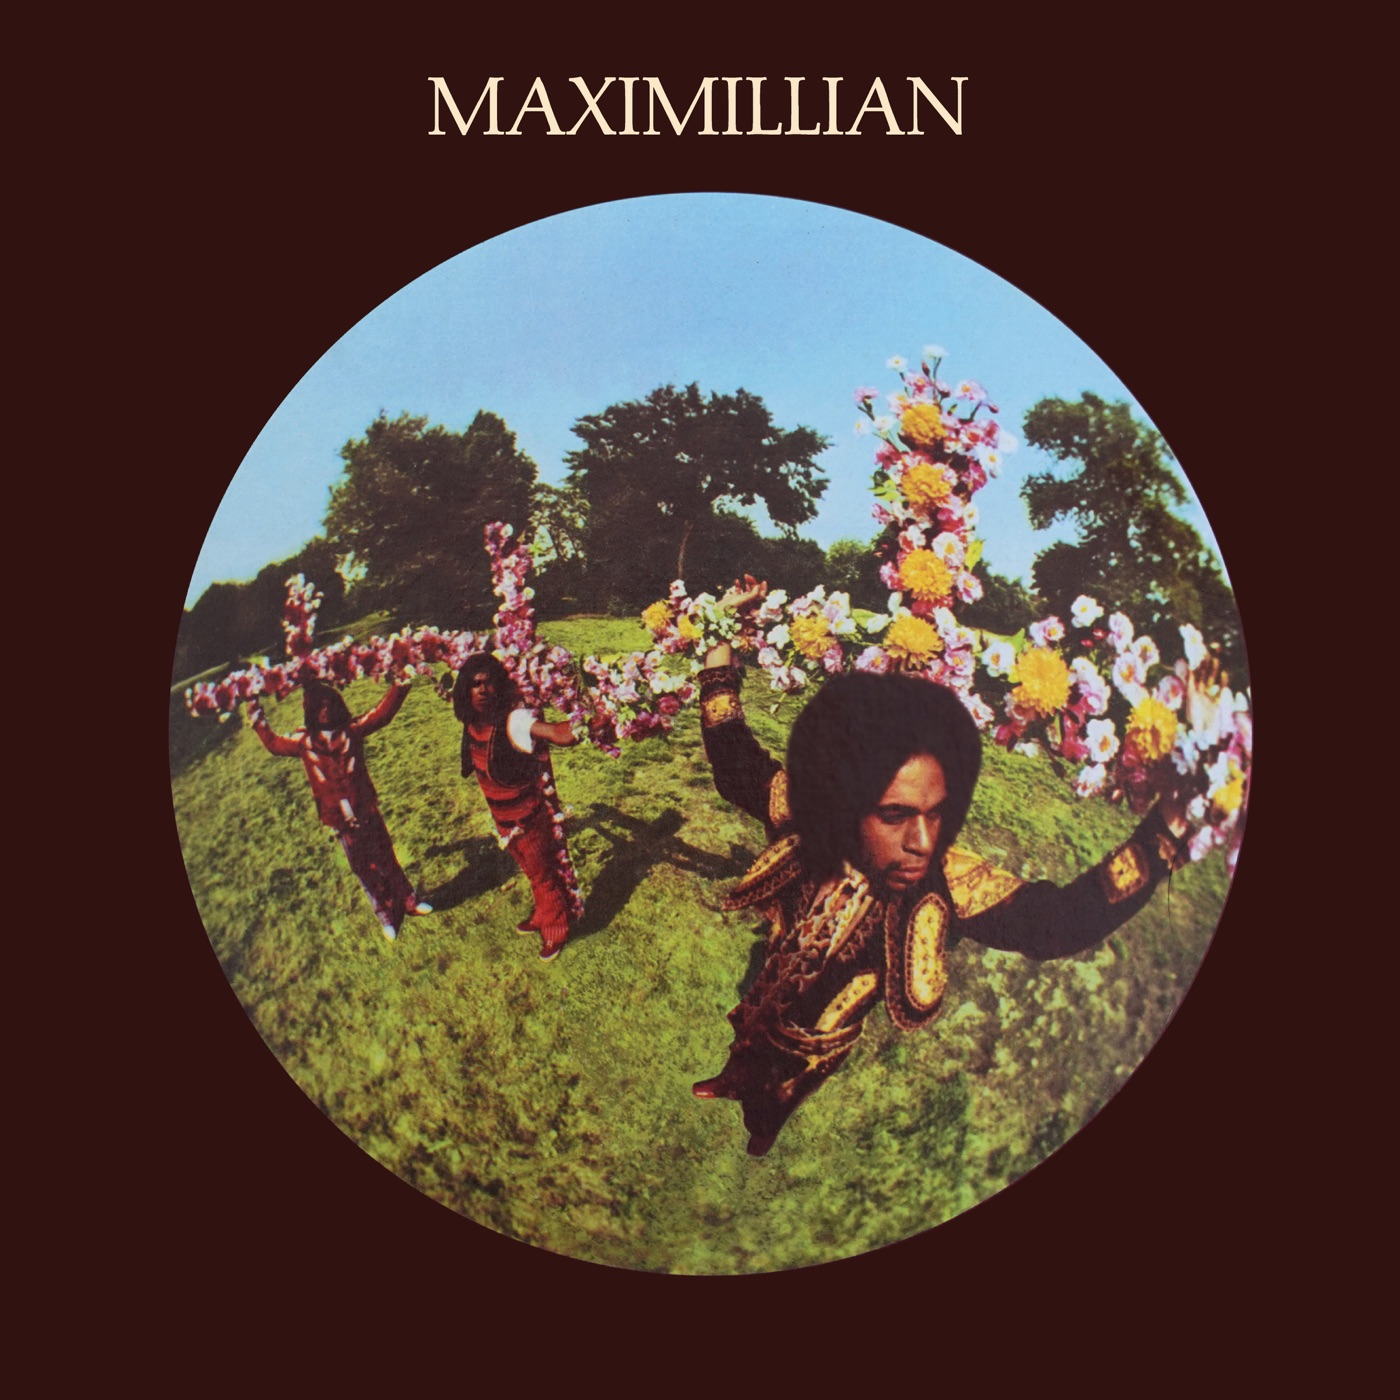 Maximillian by Maximillian